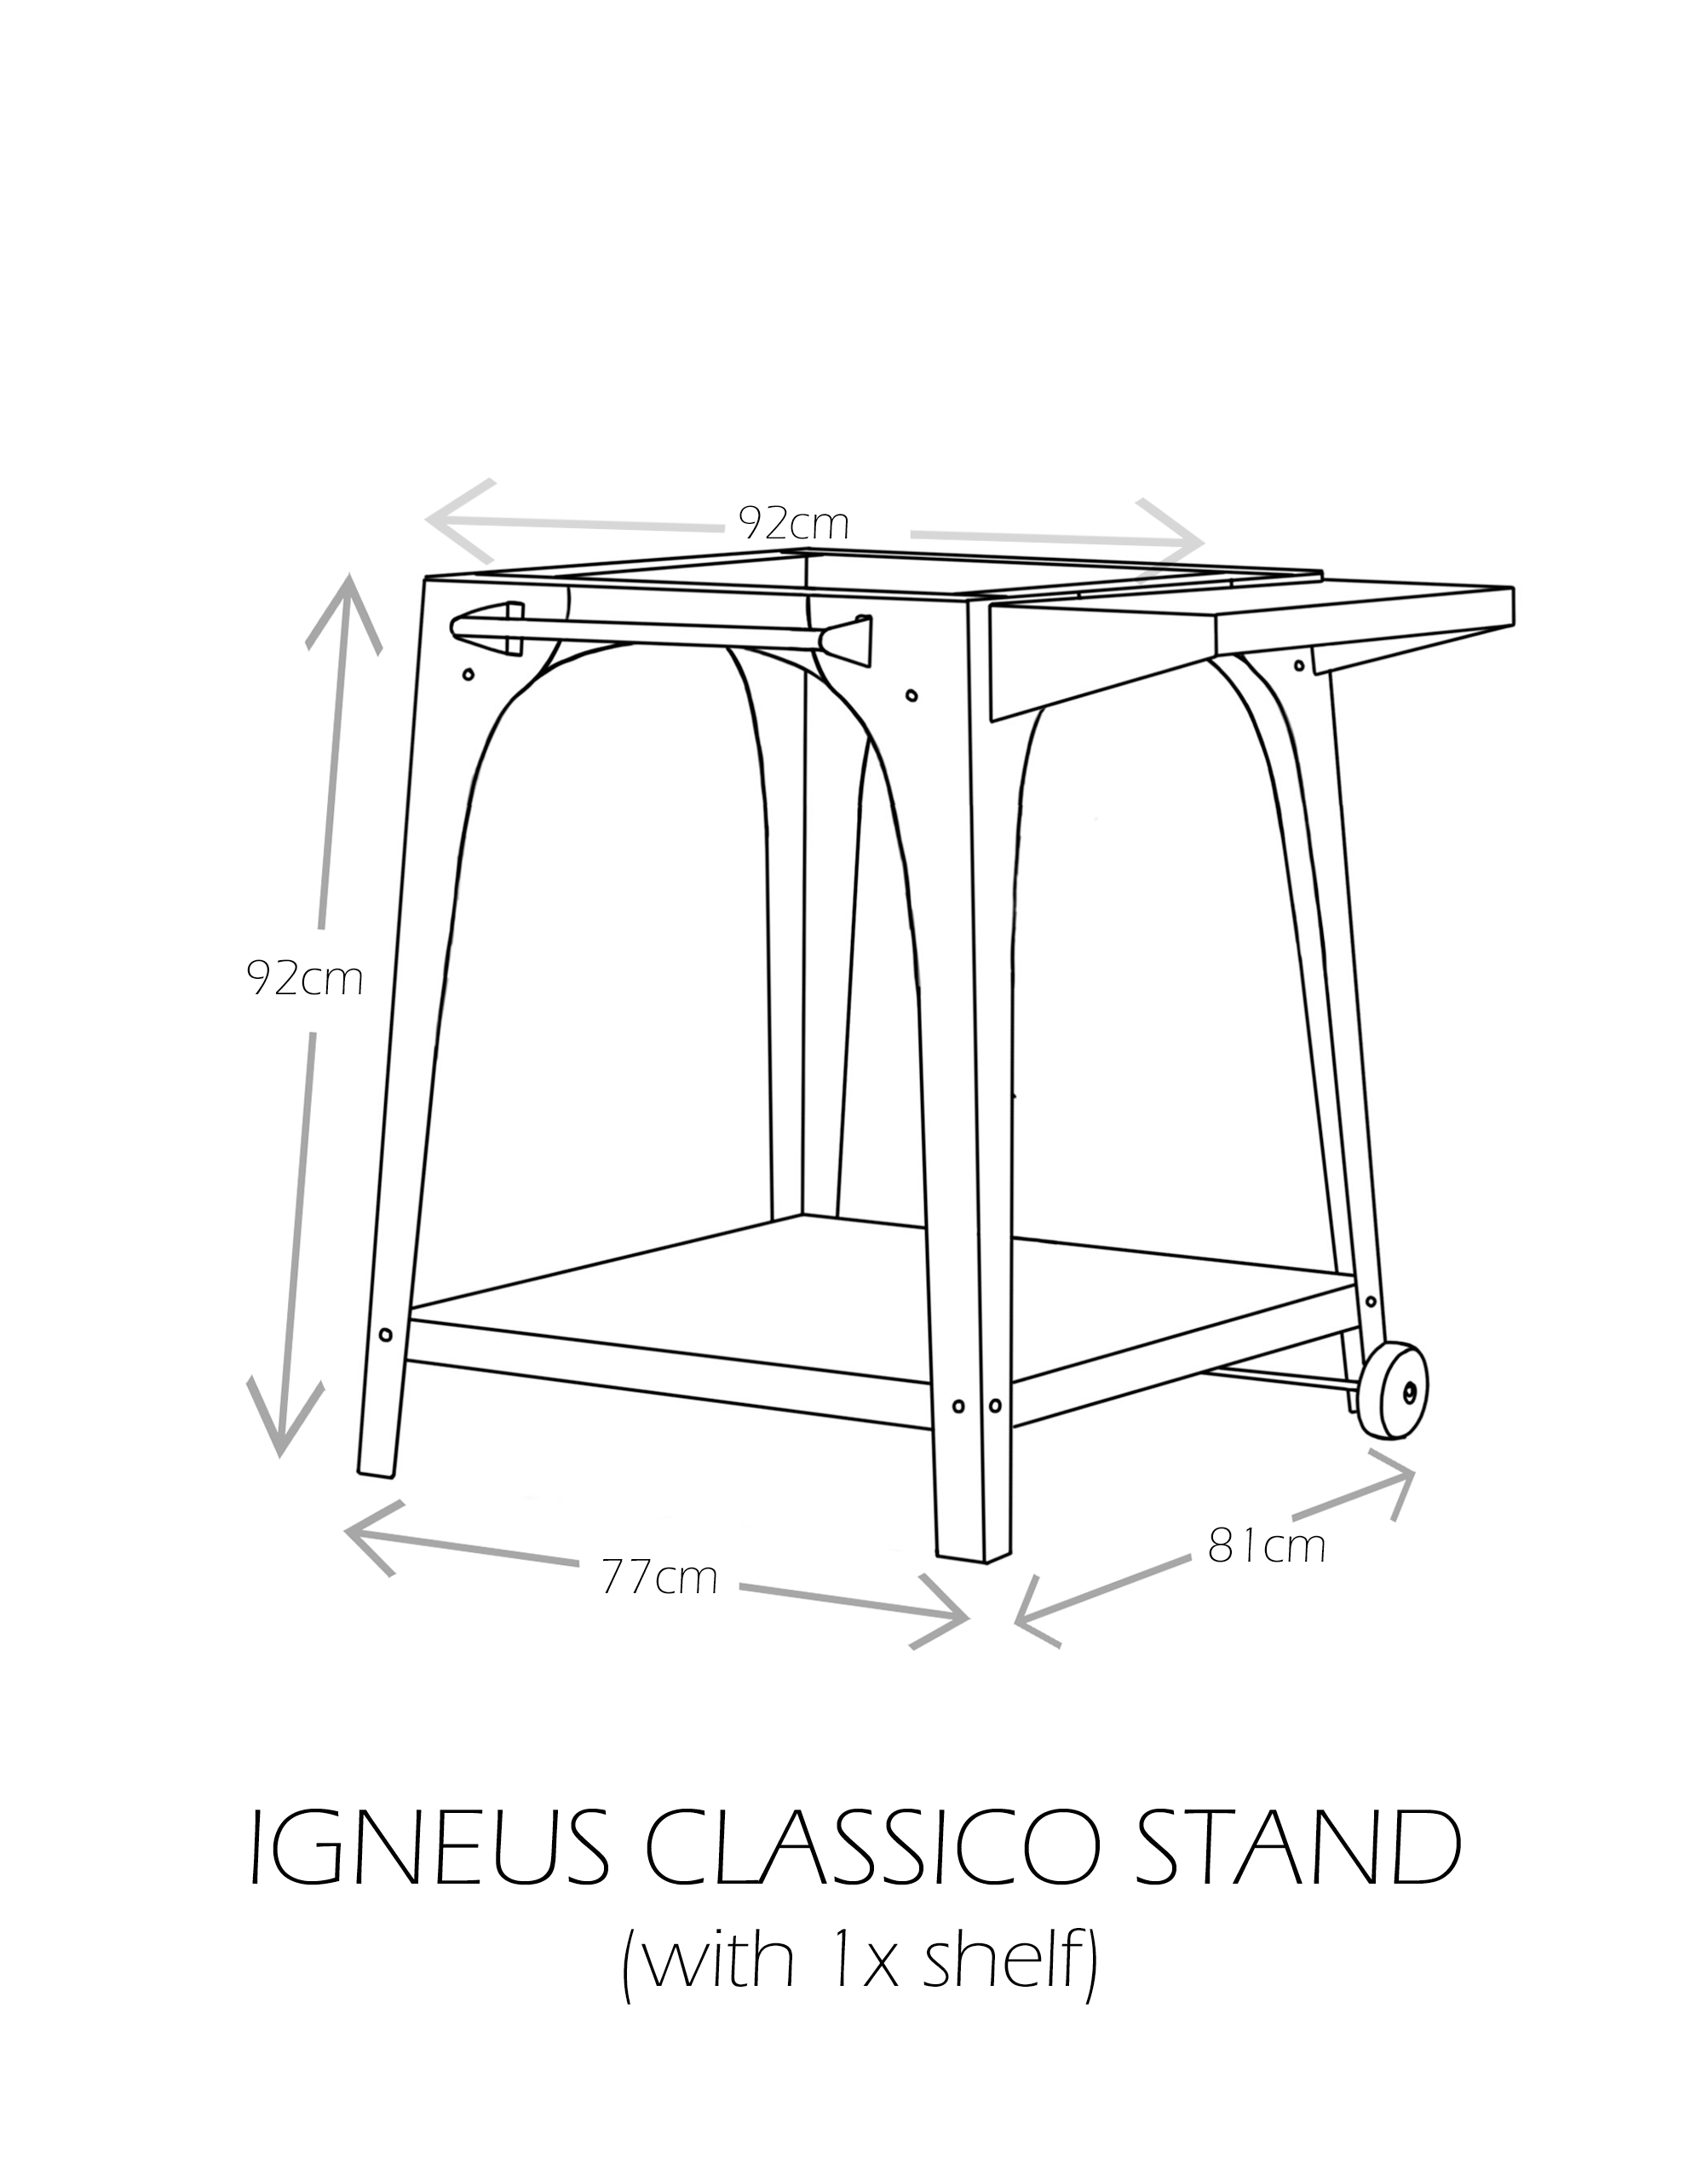 Igneus Classico Stand with 1x shelf - Dimensions